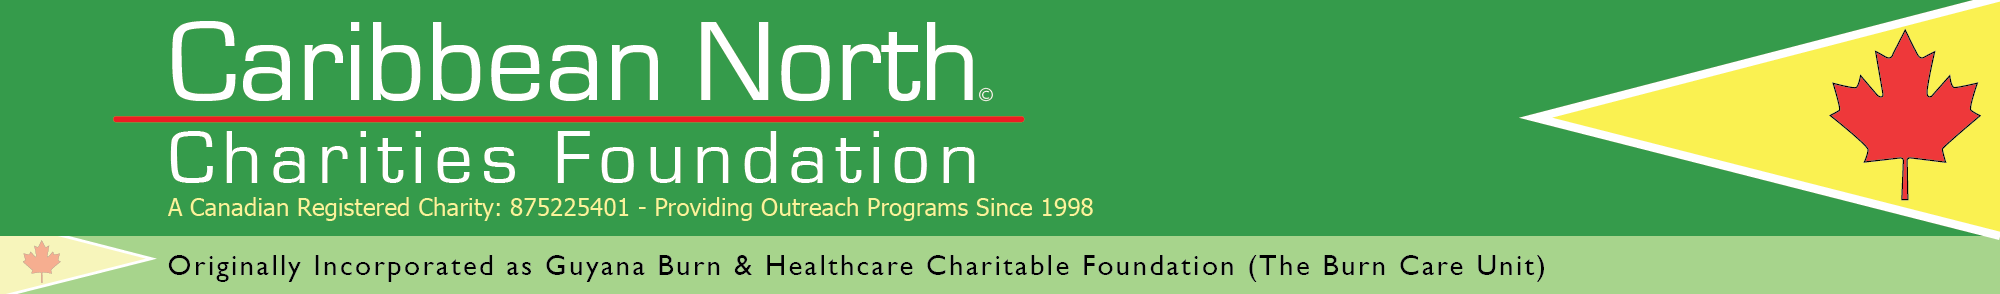 Caribbean North Charities Foundation